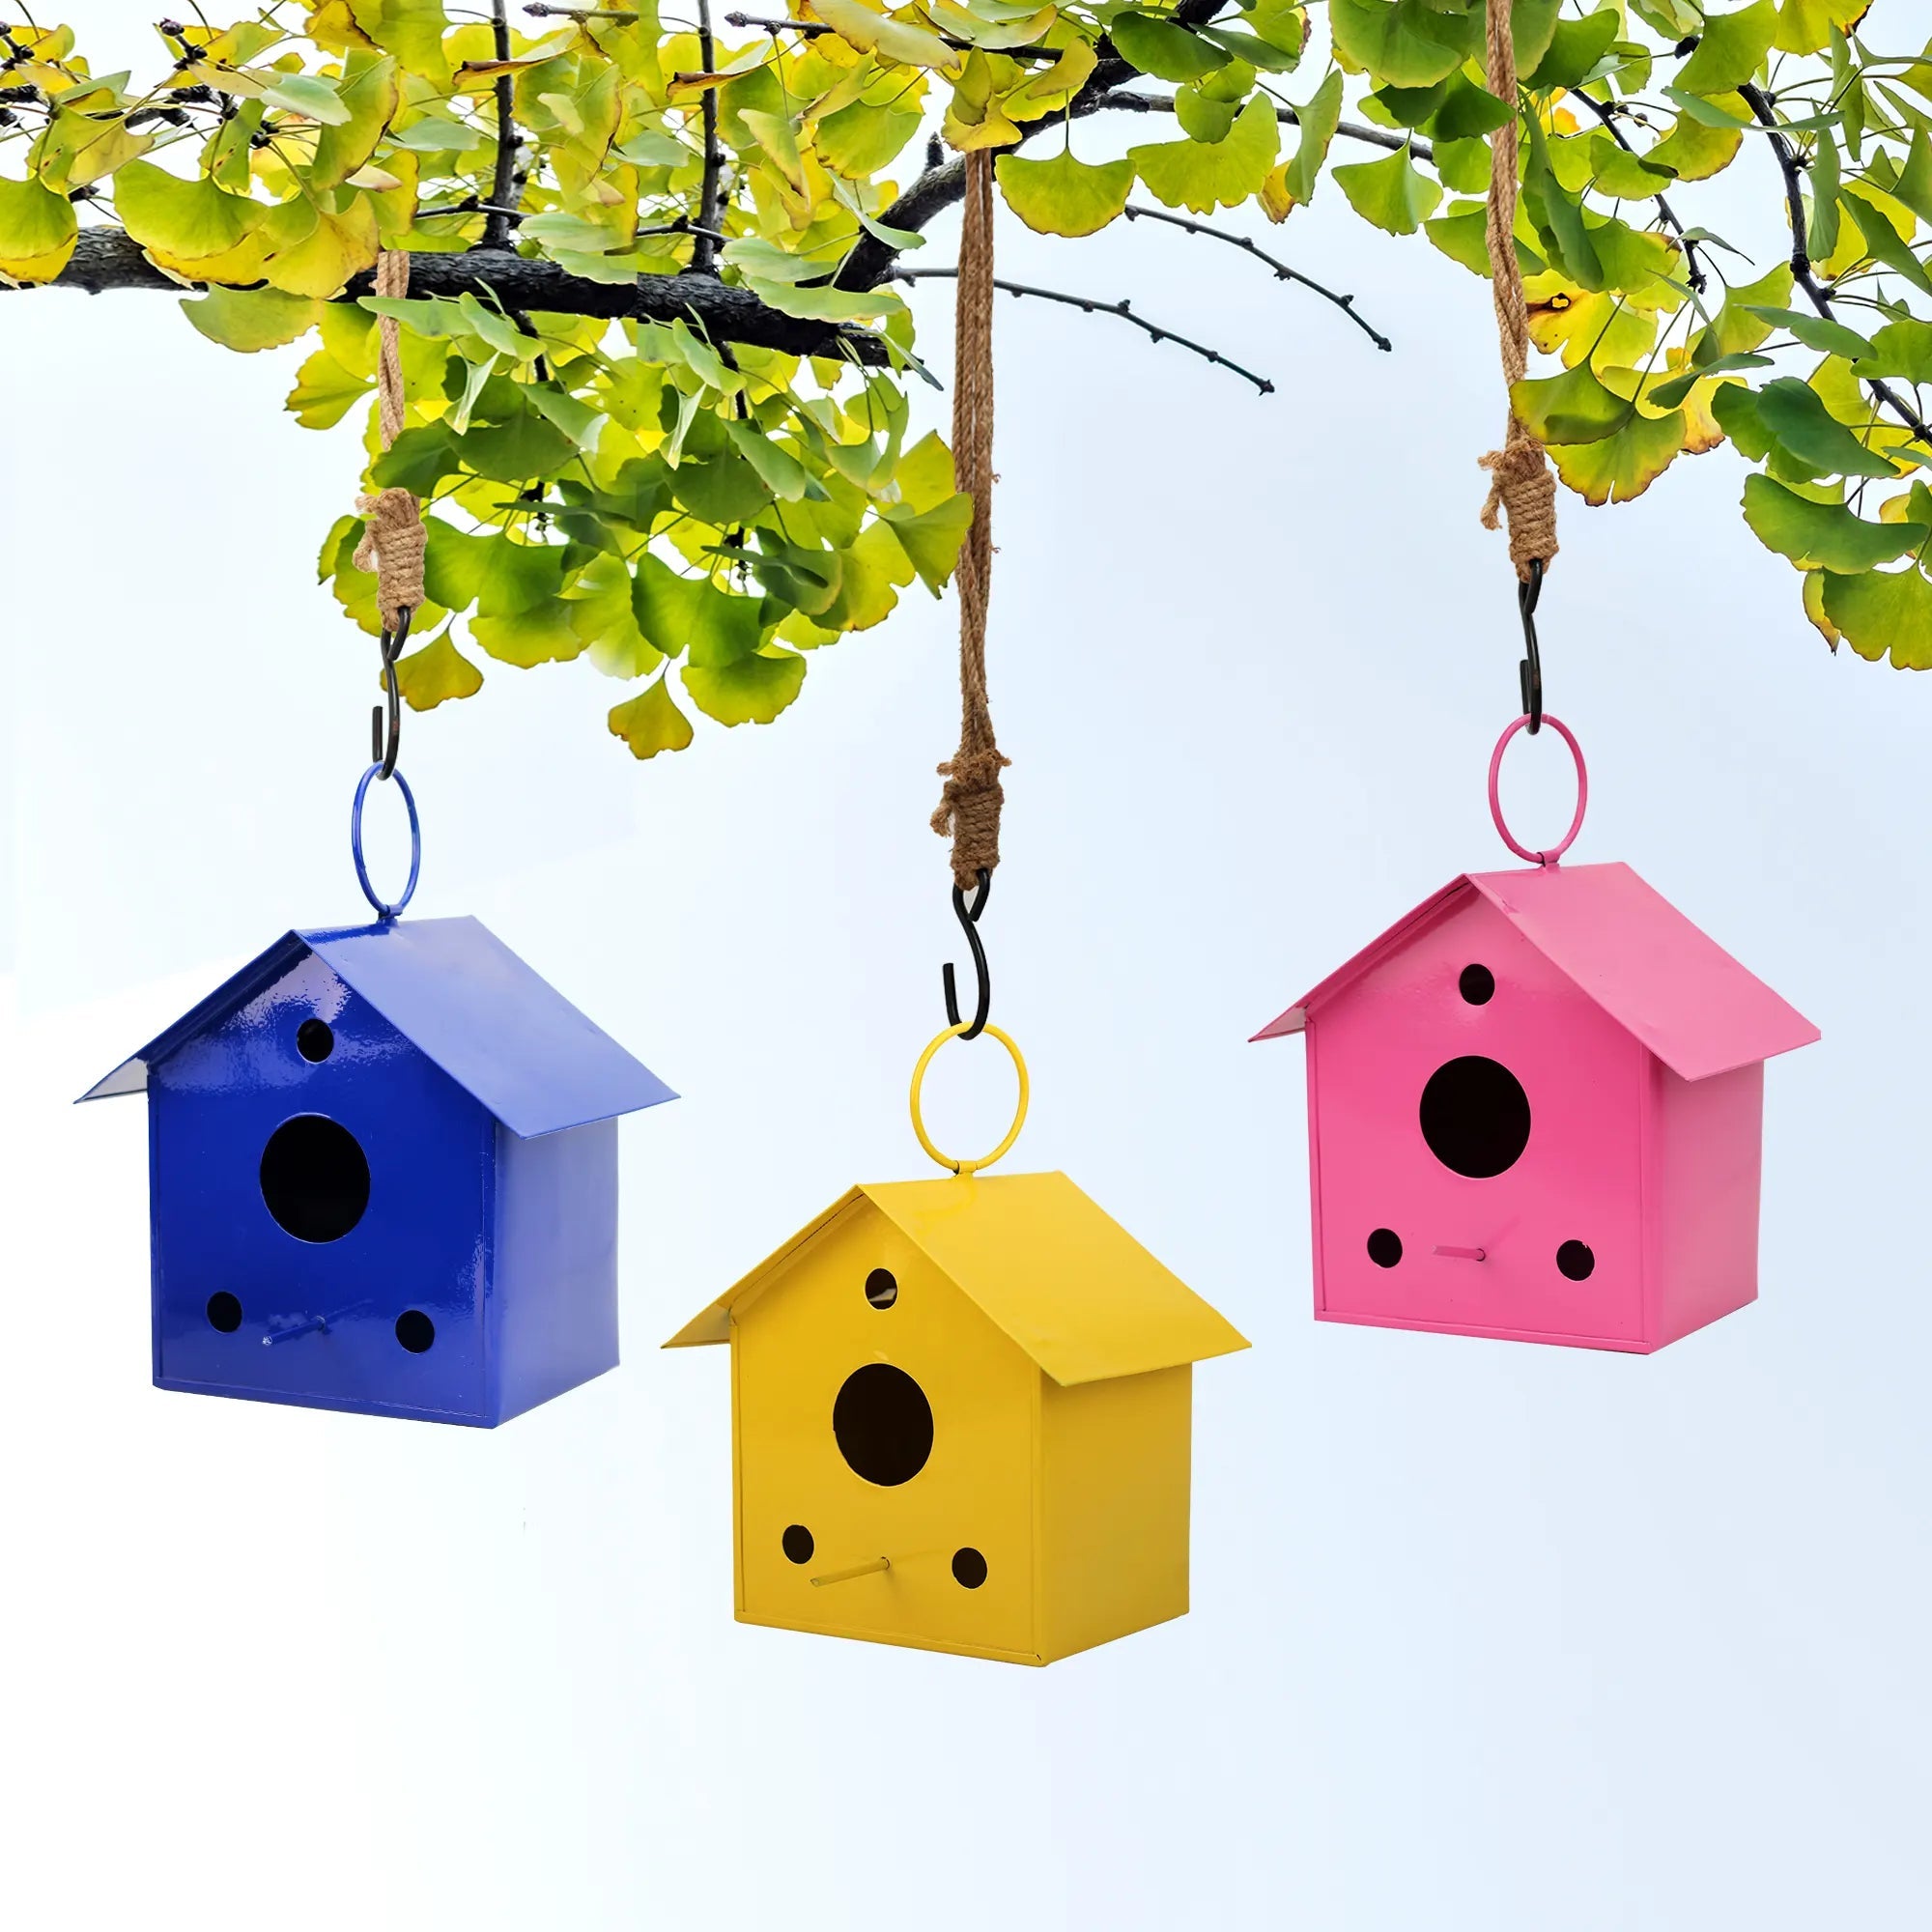 Colorful Metal Hanging Bird House-Set of 3 - 1210 Y,B,P